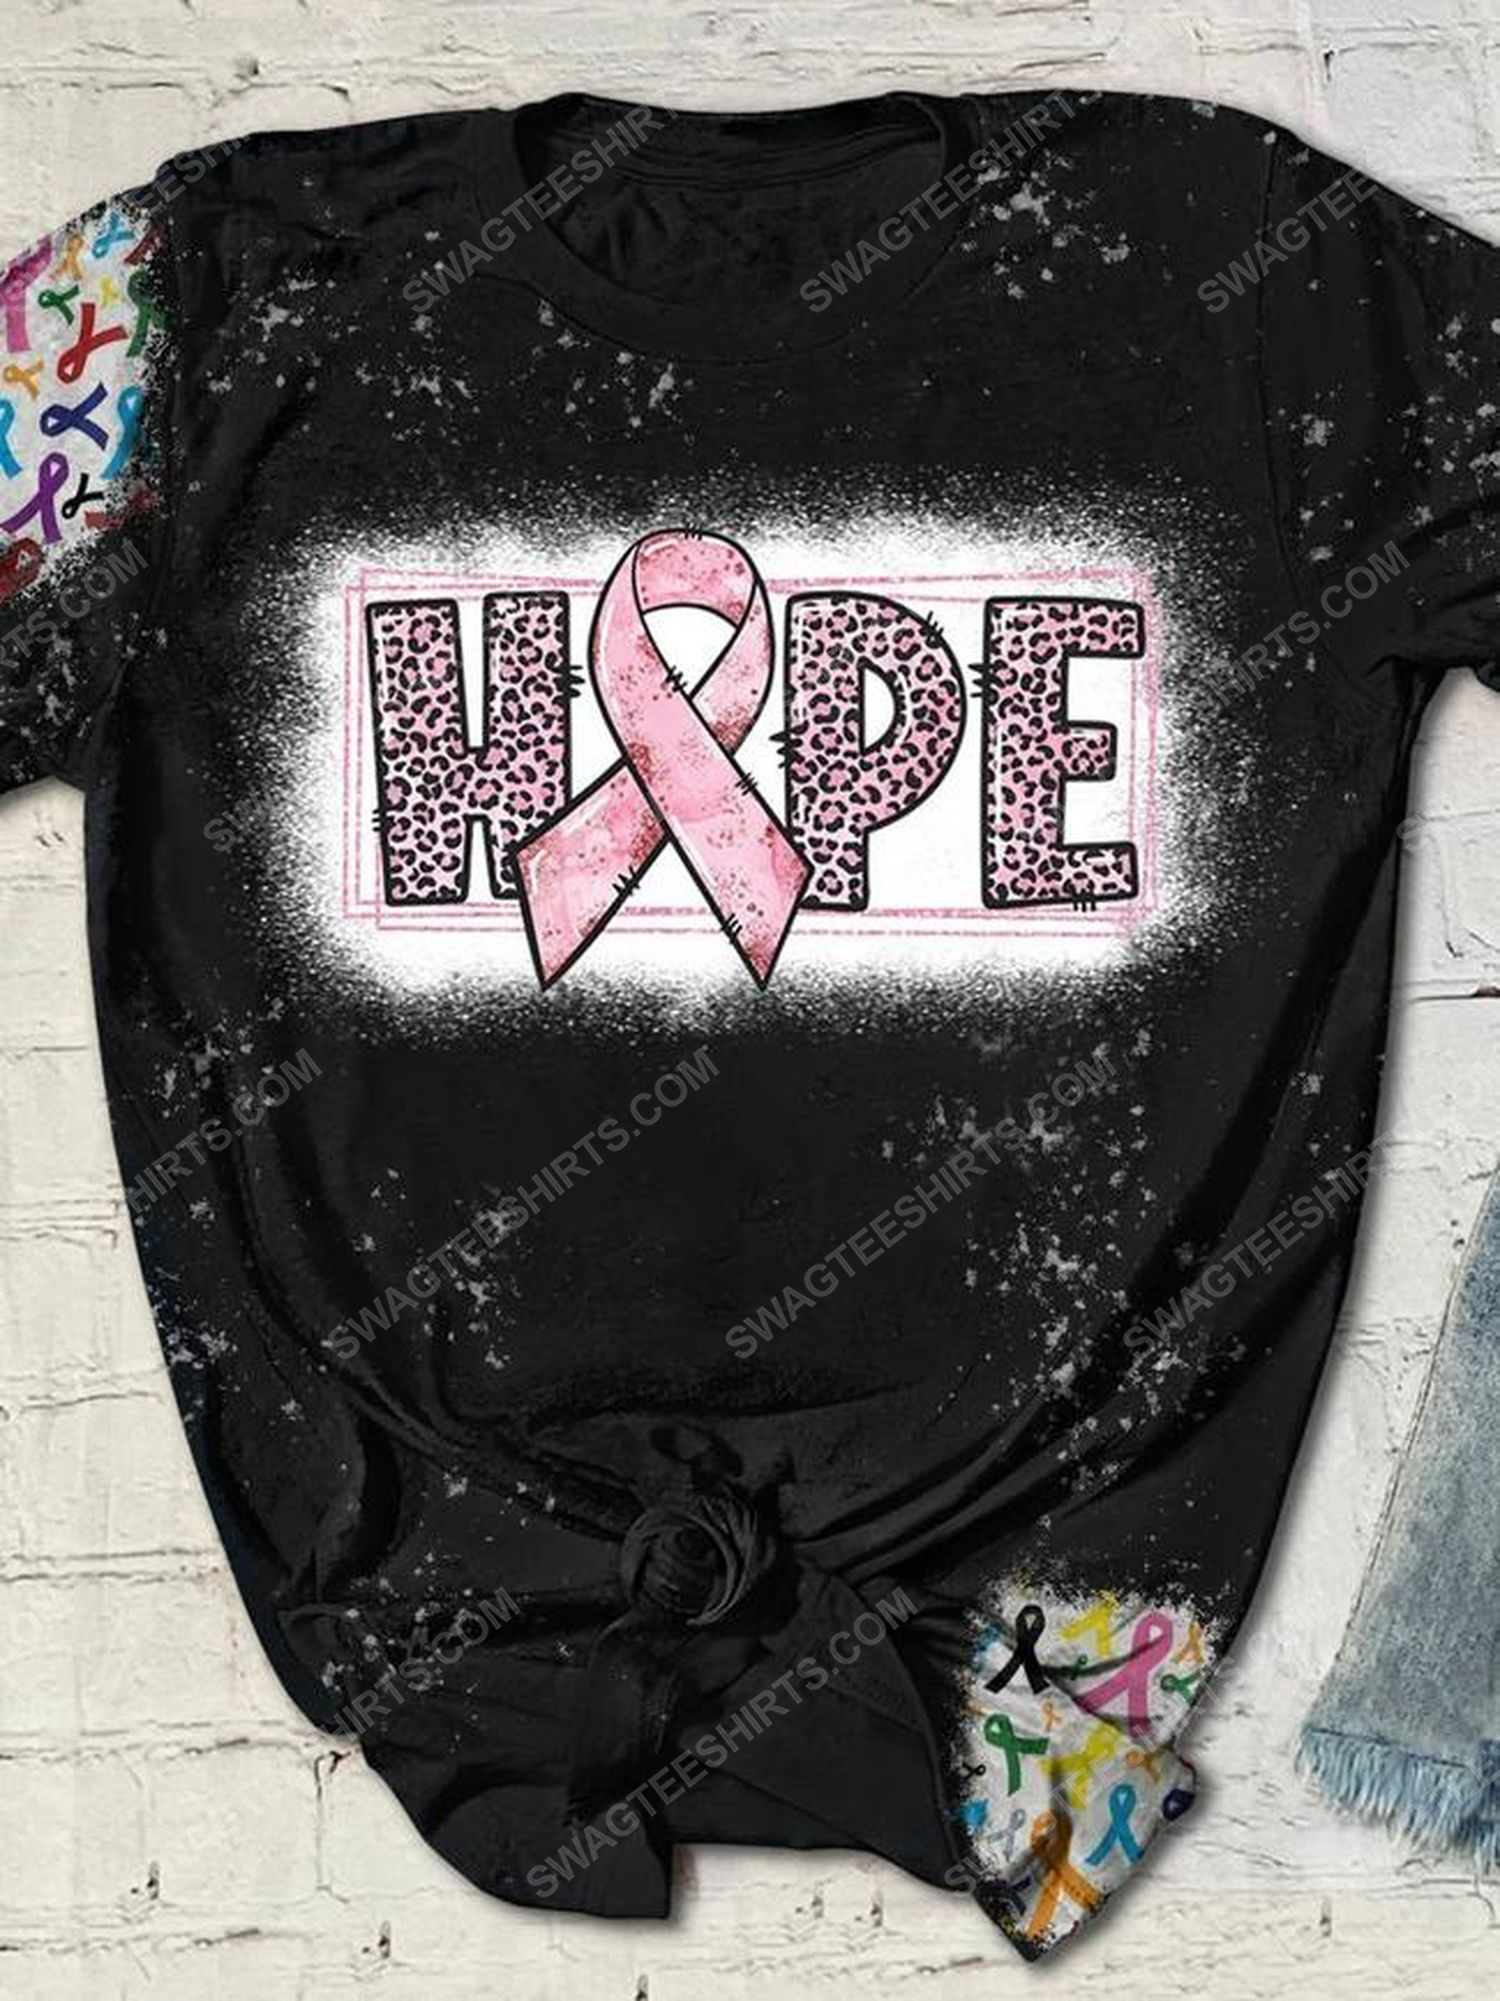 Breast cancer awareness hope full print shirt 1 - Copy (2)